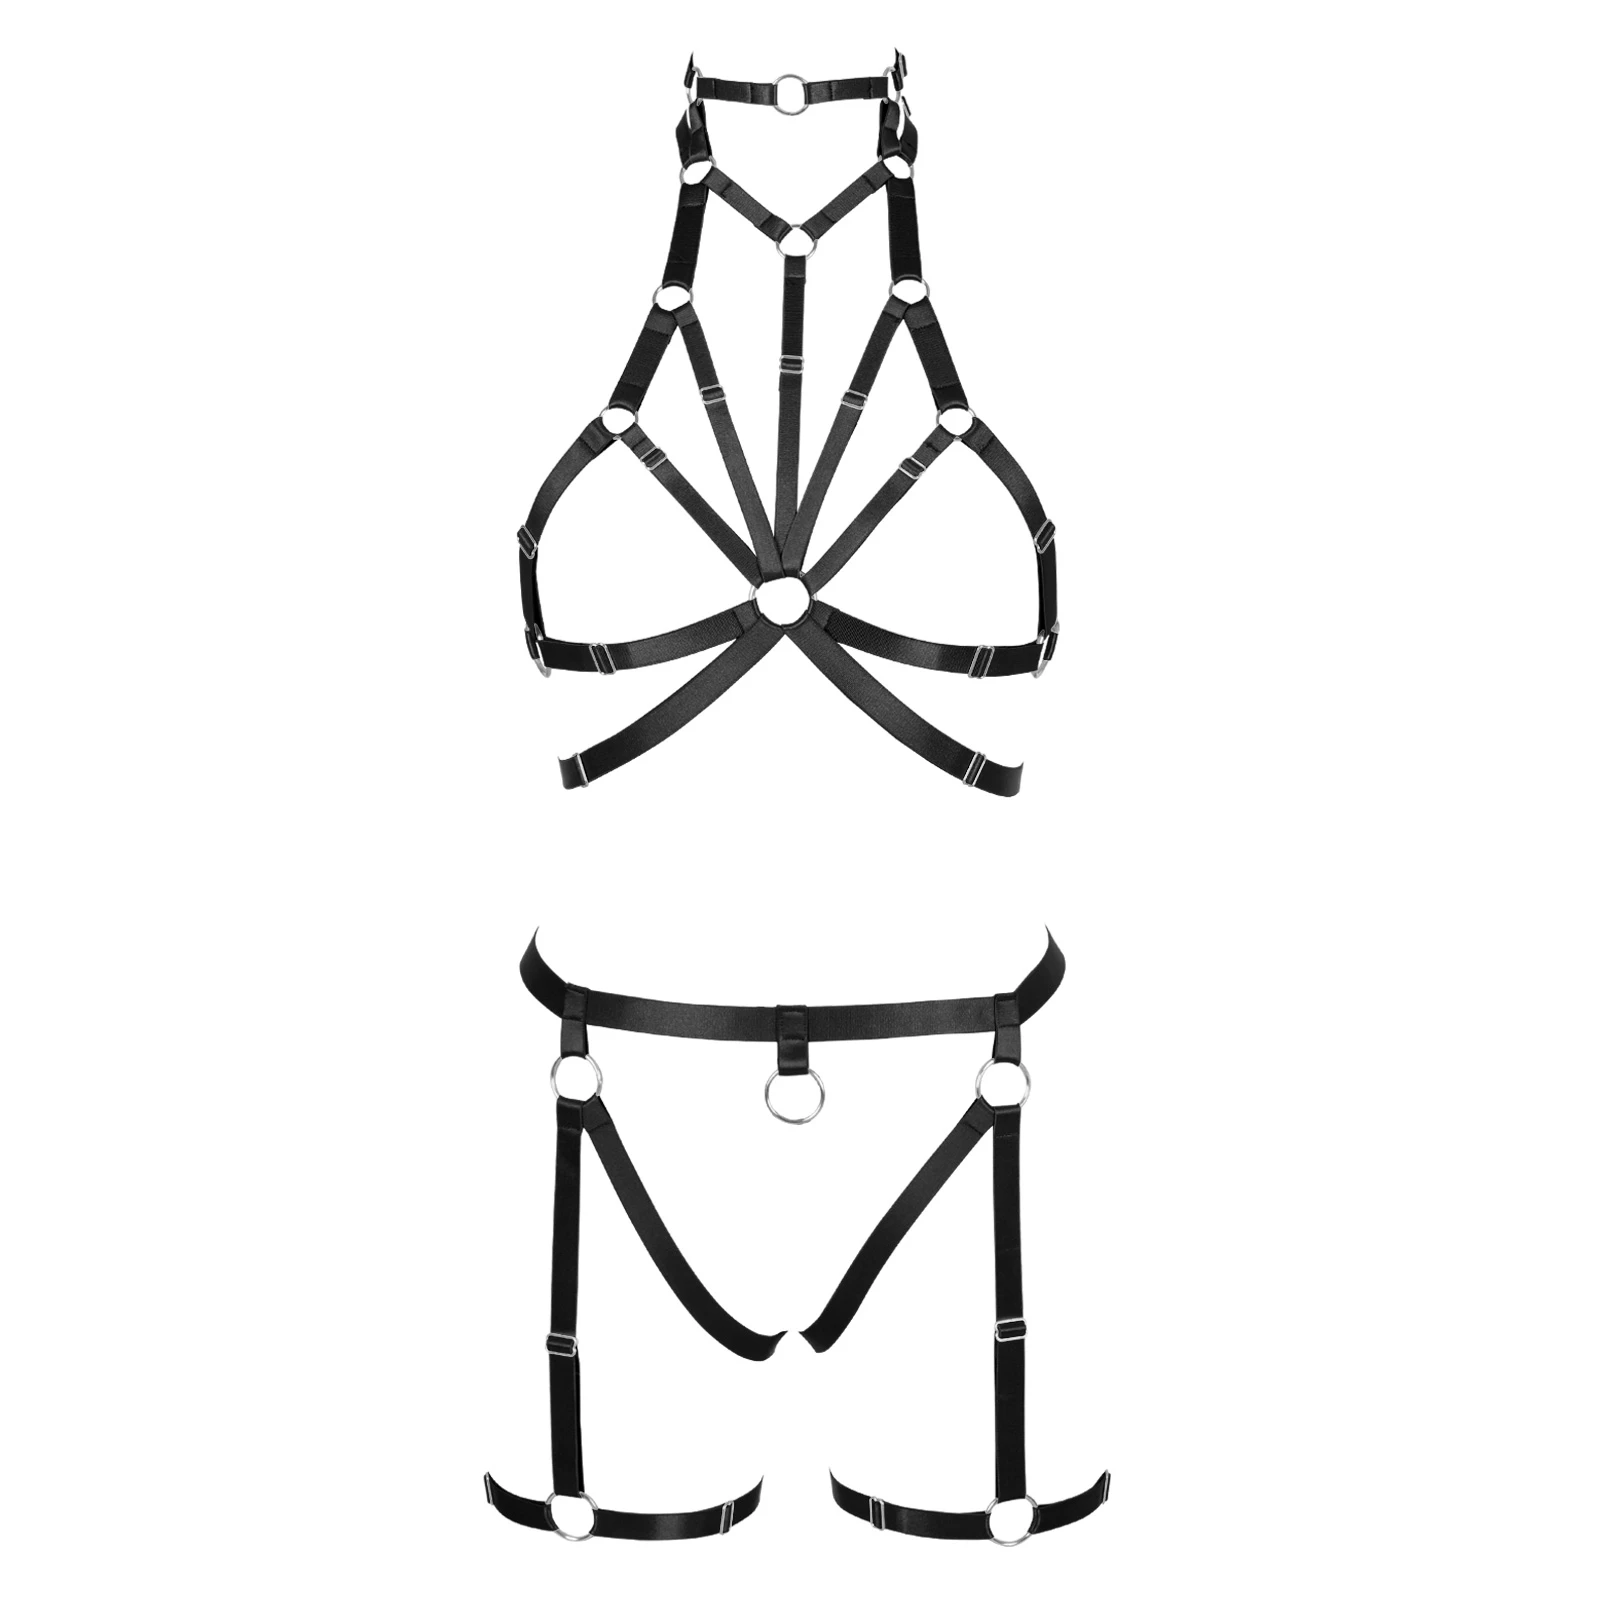 Women's Full Body Harness, Adjustable Strap Harness, Cage Bodysuit